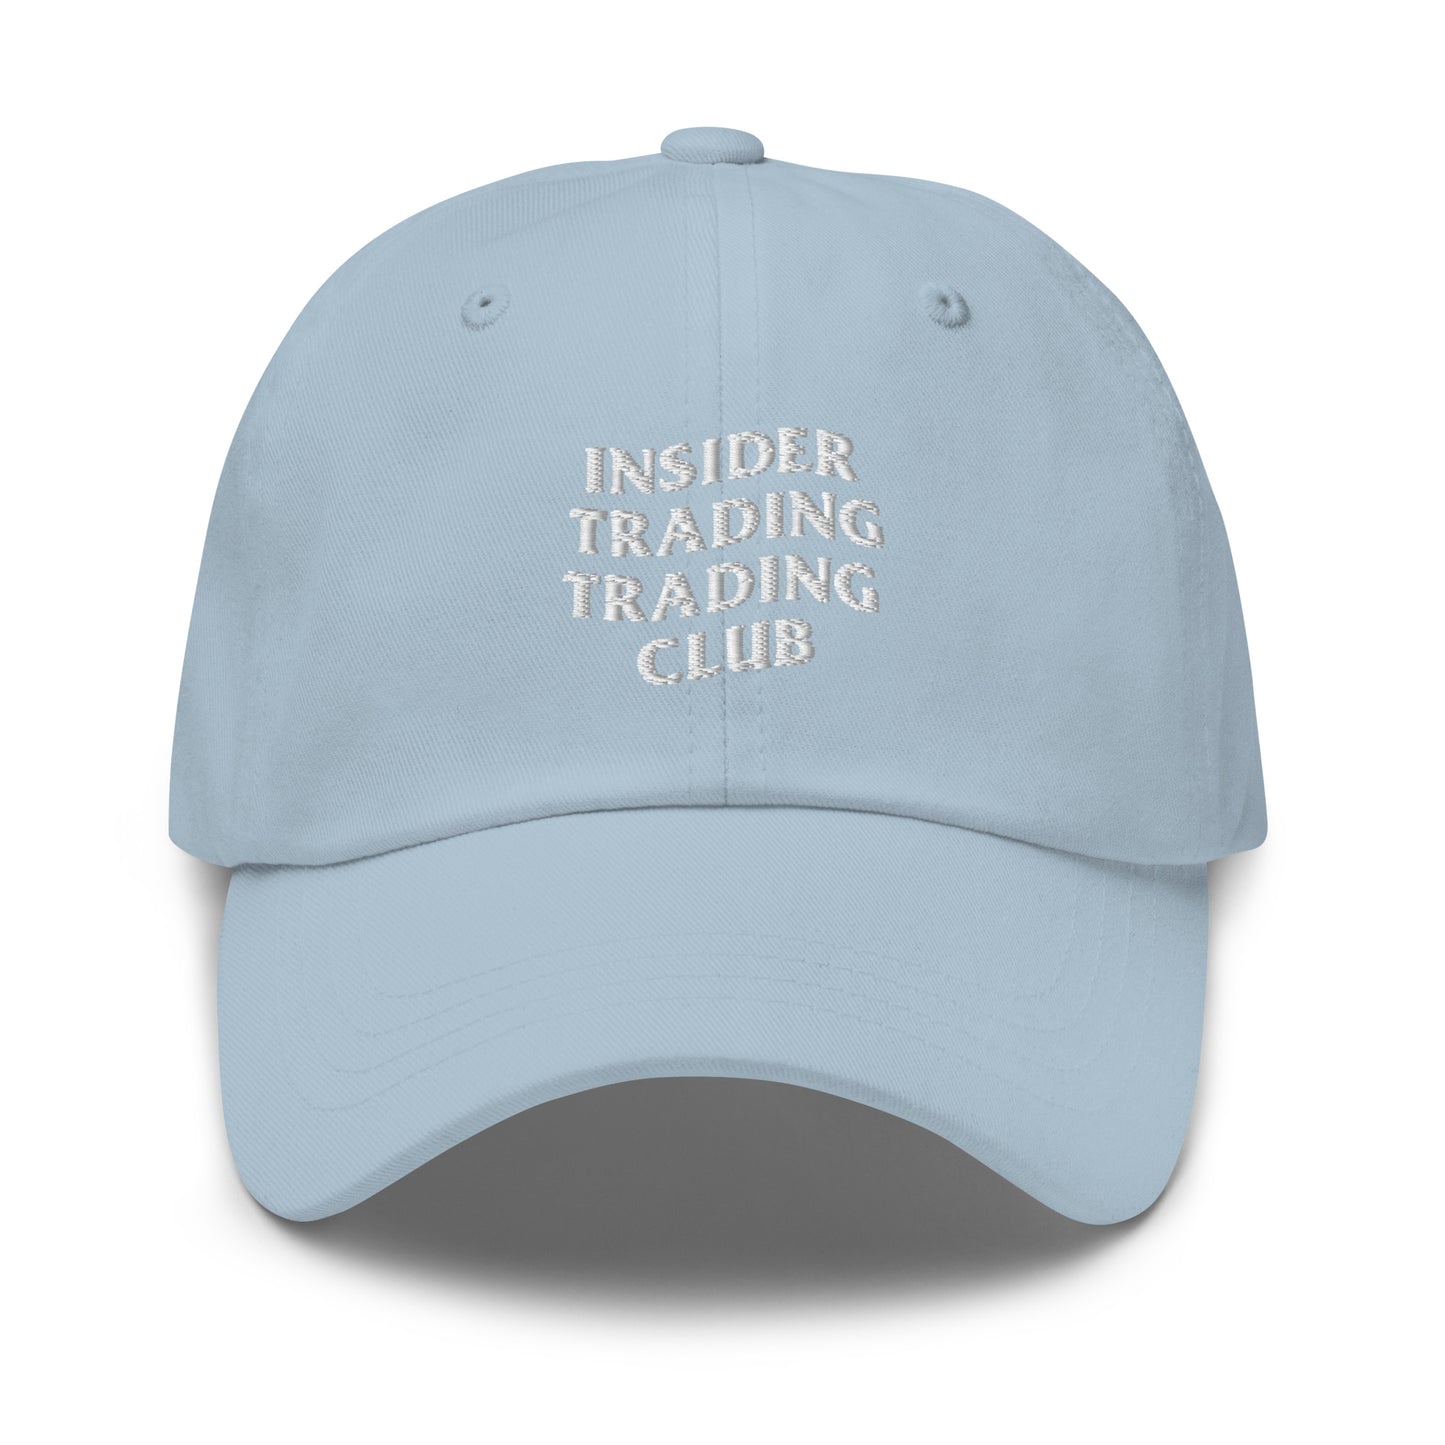 Insider Trading Trading Club Cap